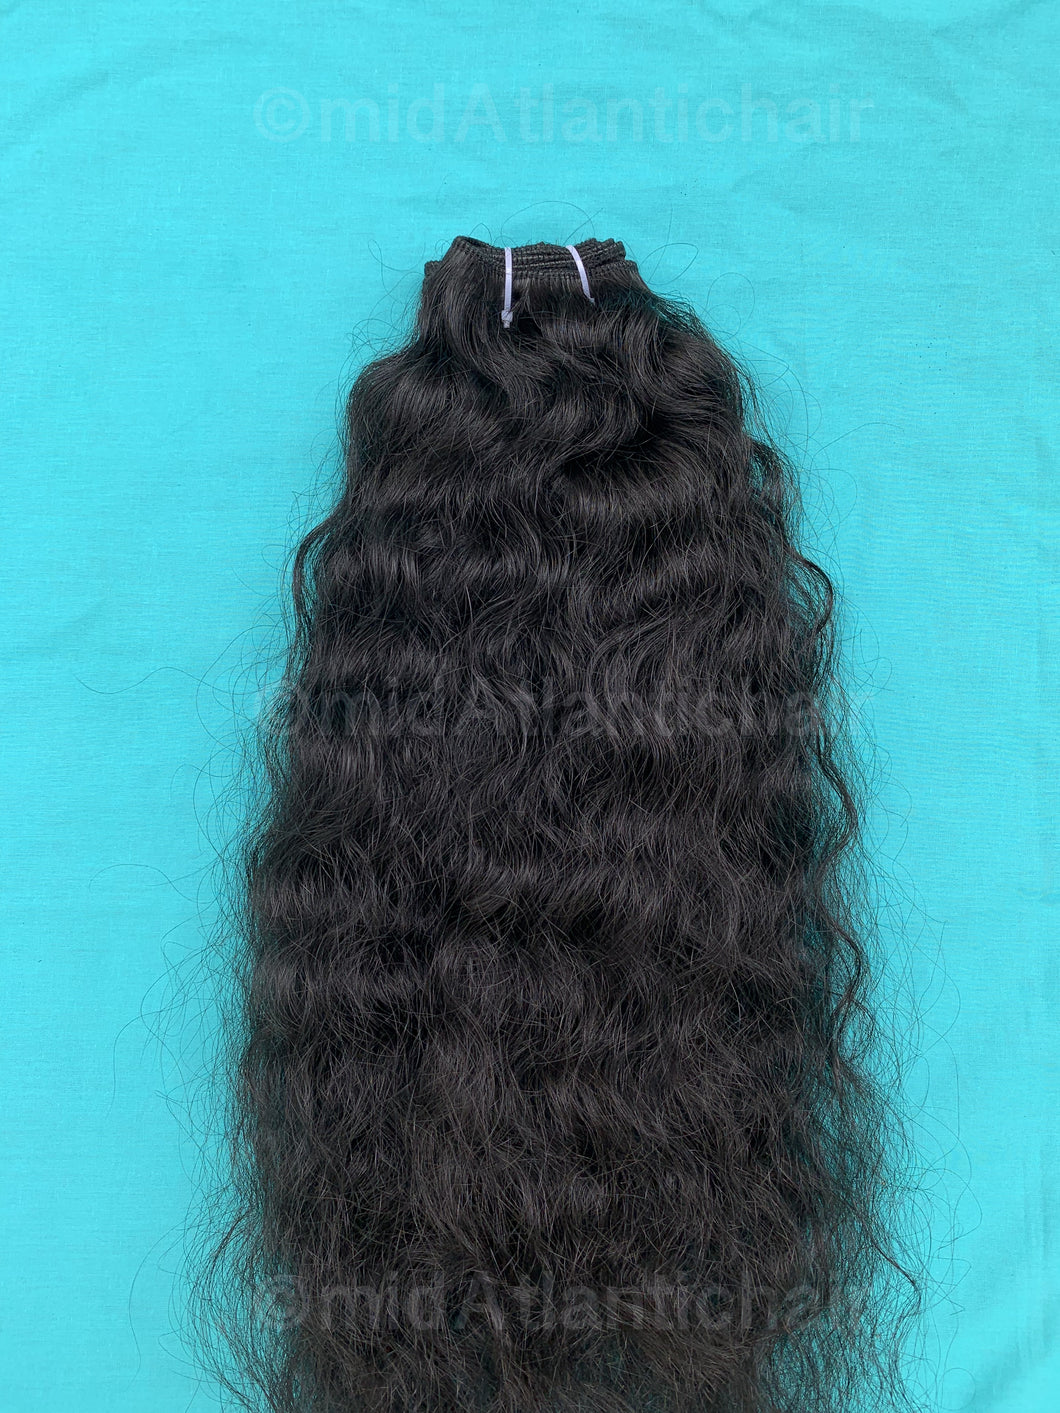 Virgin Indian Curly Hair Weft